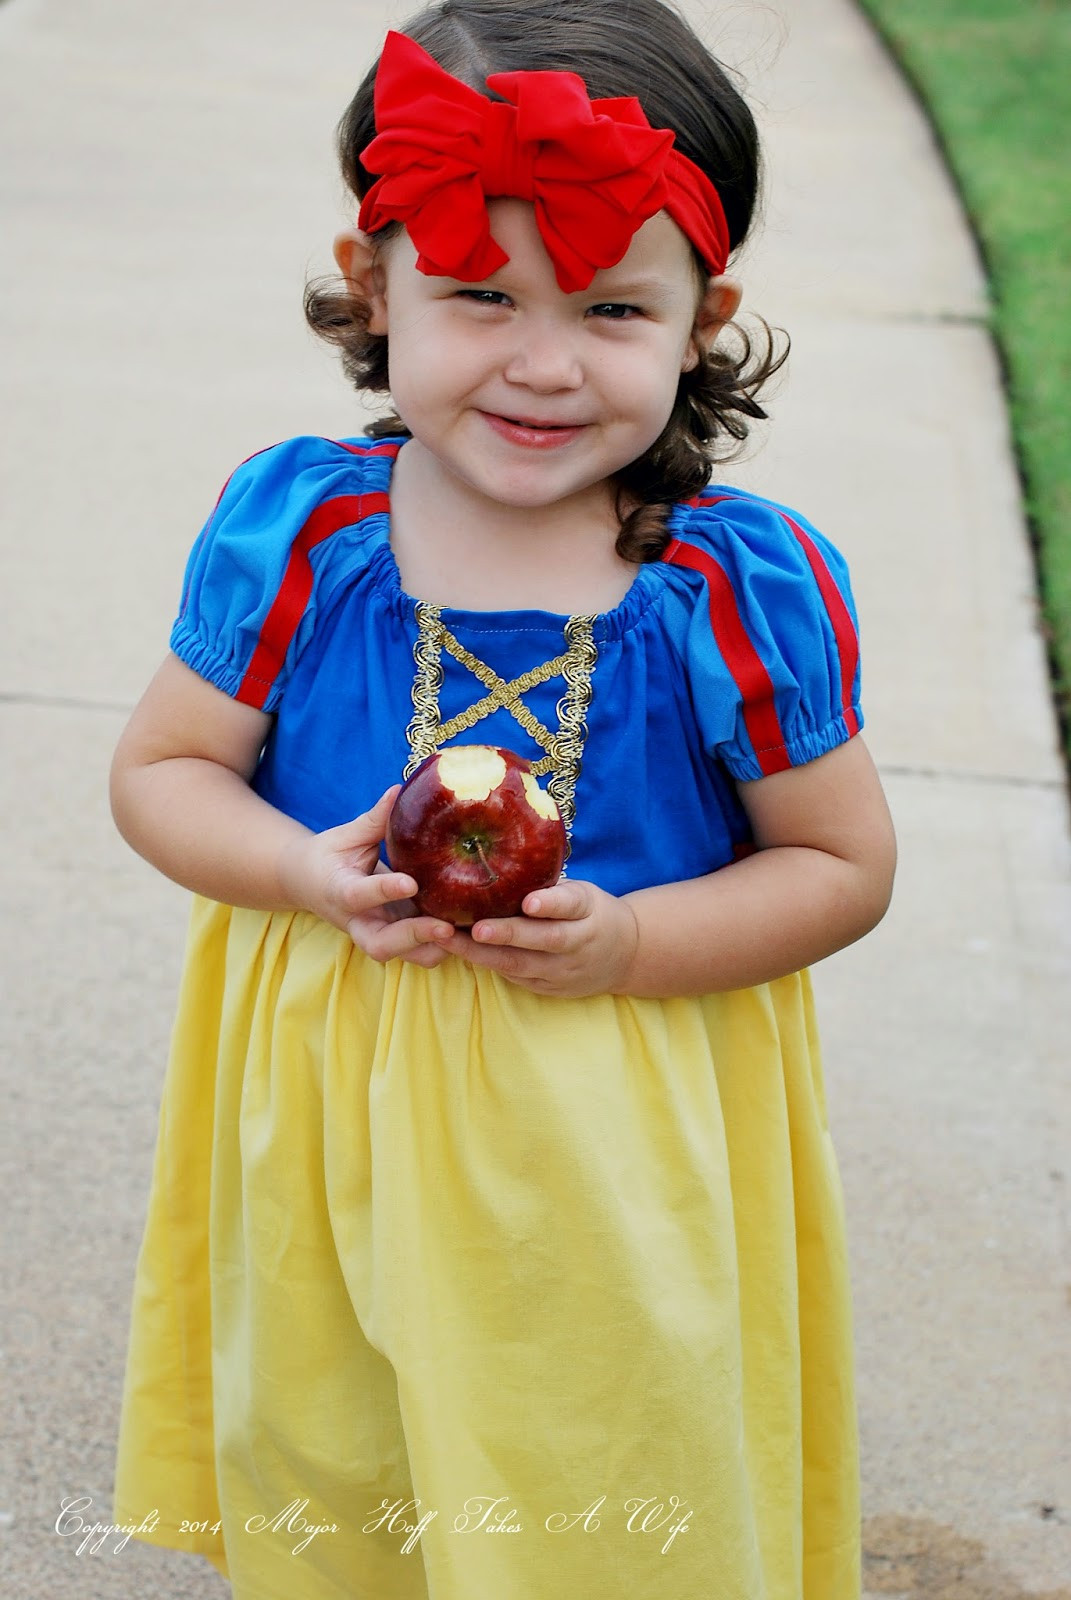 DIY Snow White Costume Toddler
 Easy To Sew Snow White Peasant Dress For Halloween or